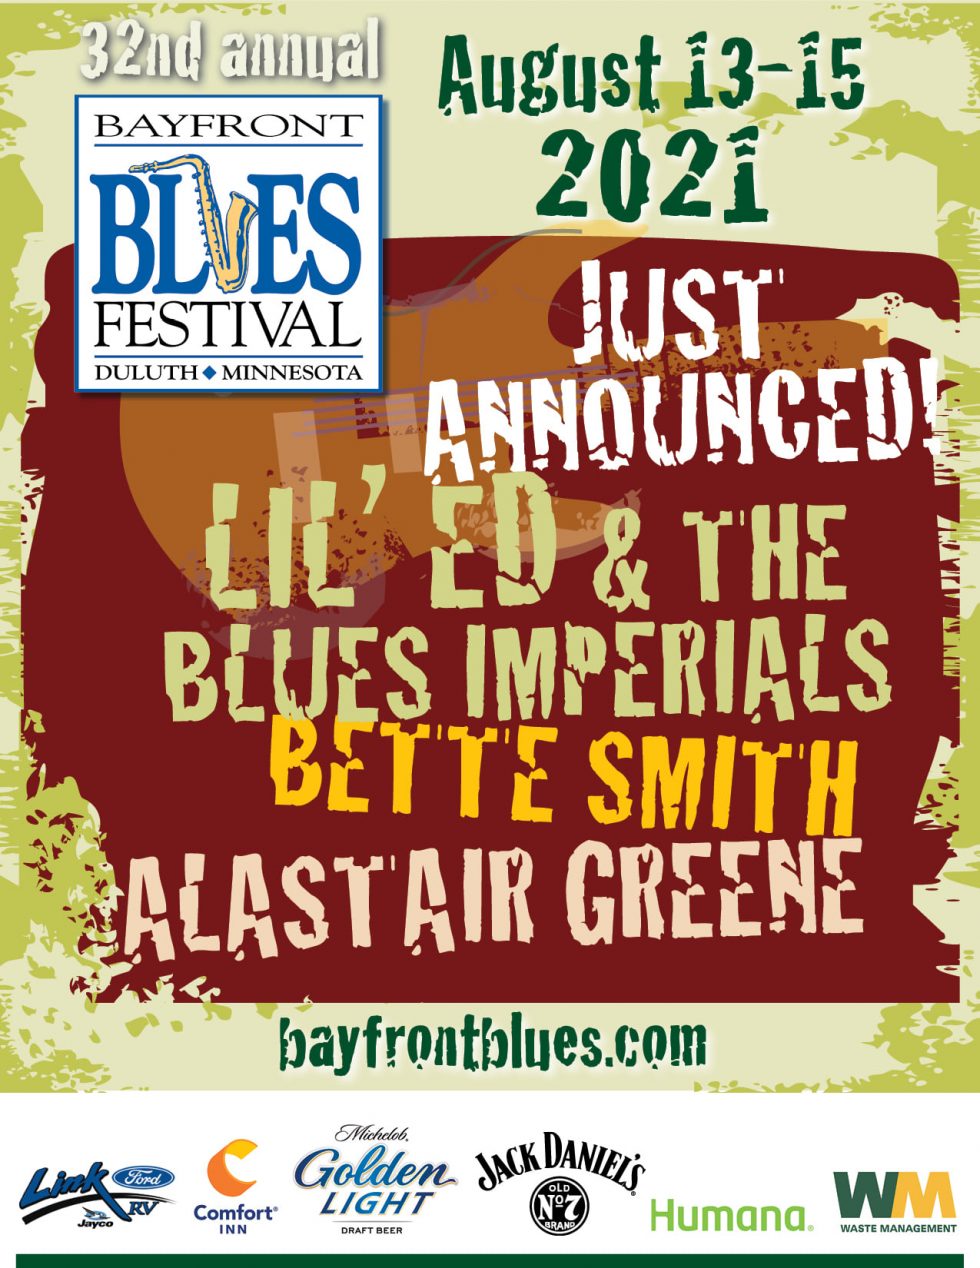 32nd Annual Bayfront Blues Festival Duluth, MN doitinnorth